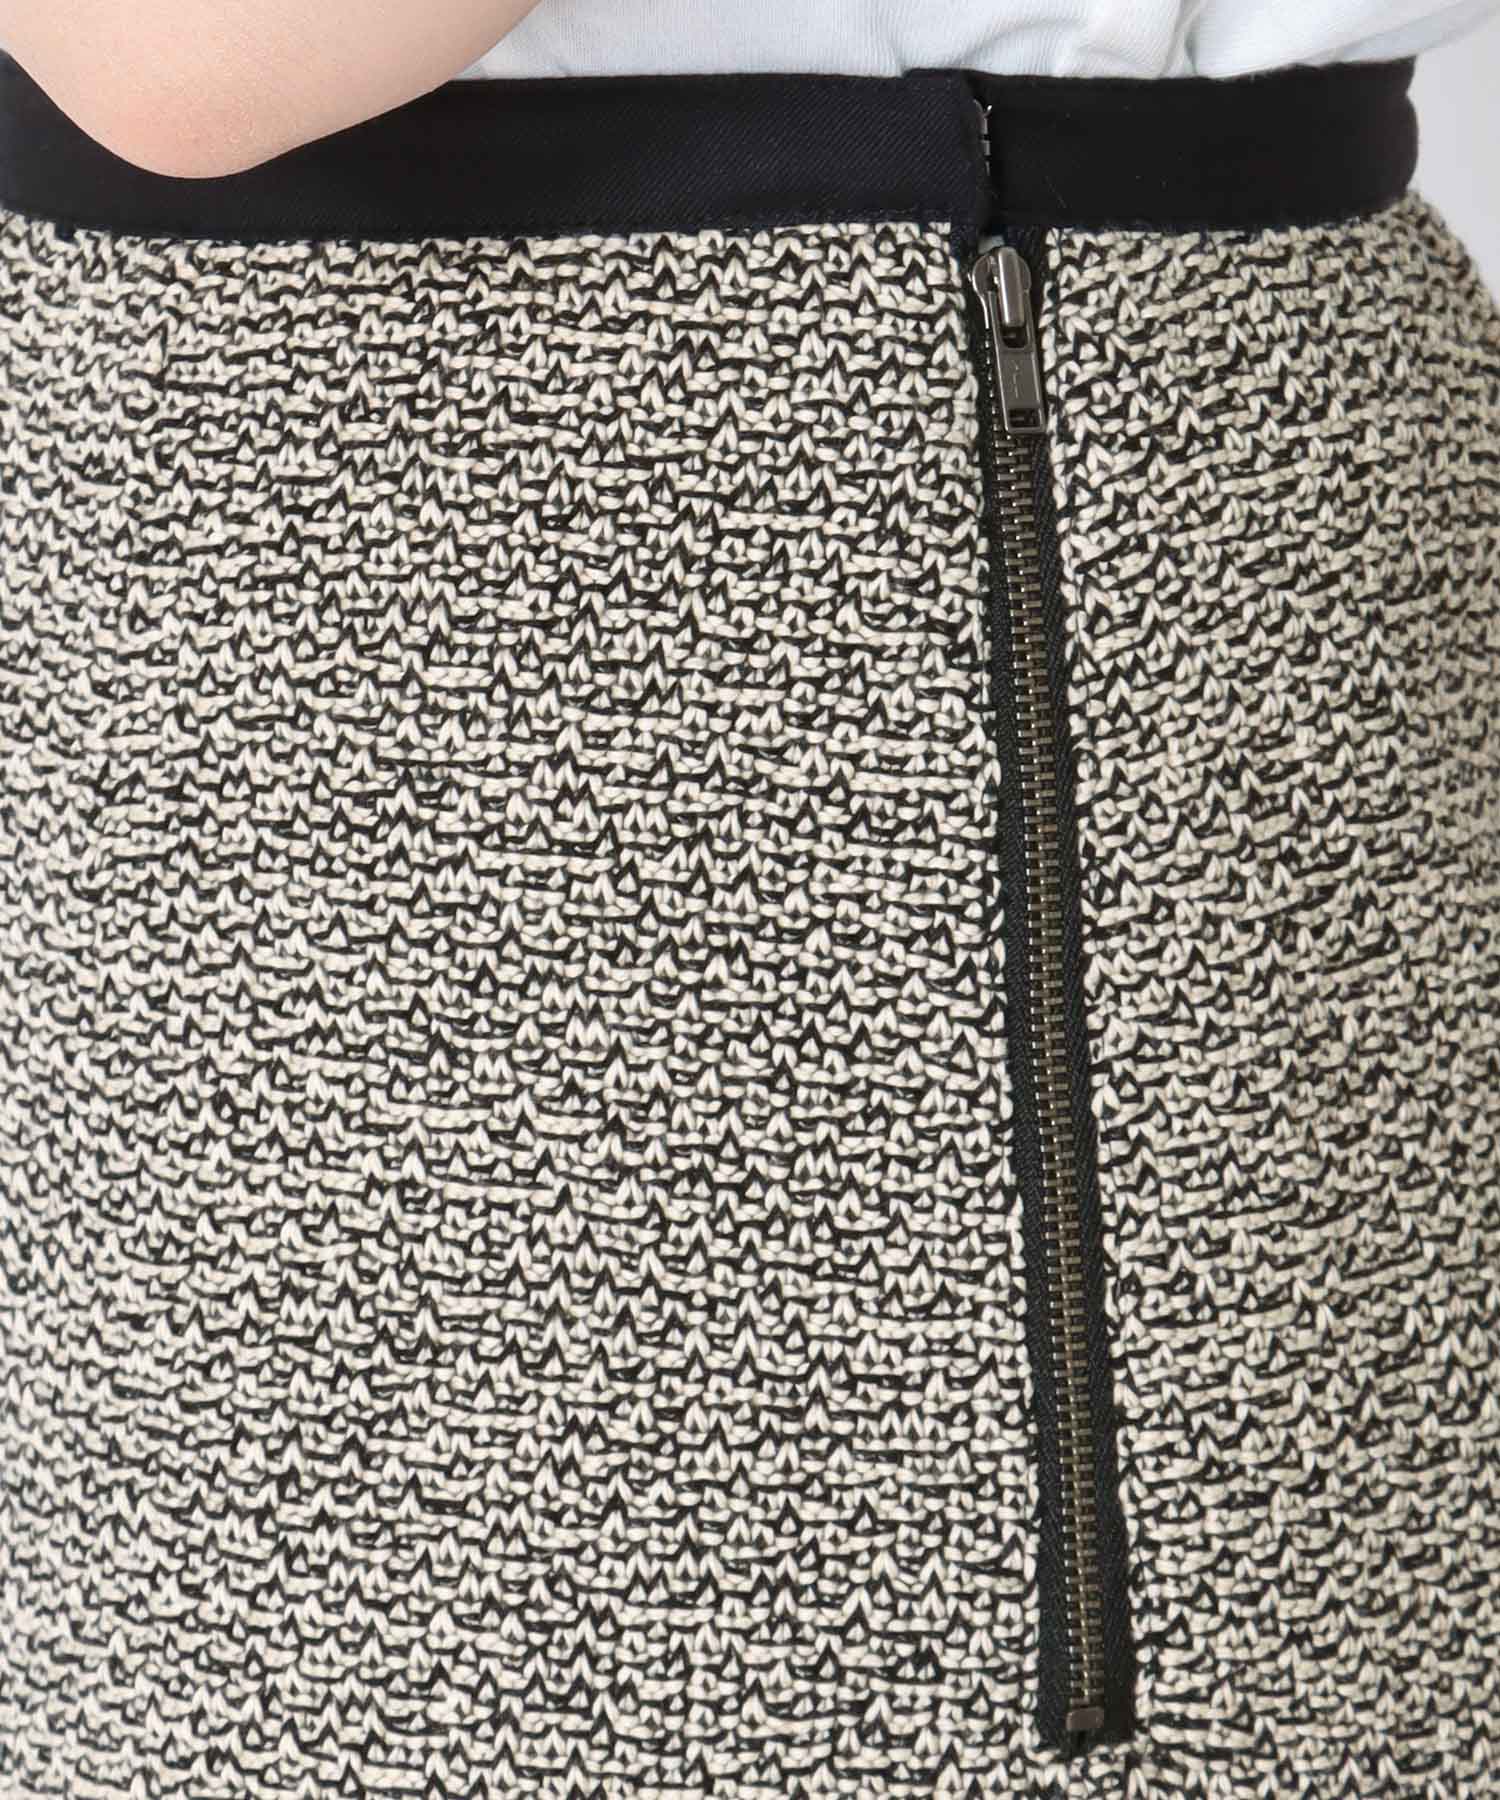 tweed knit panel flare skirt